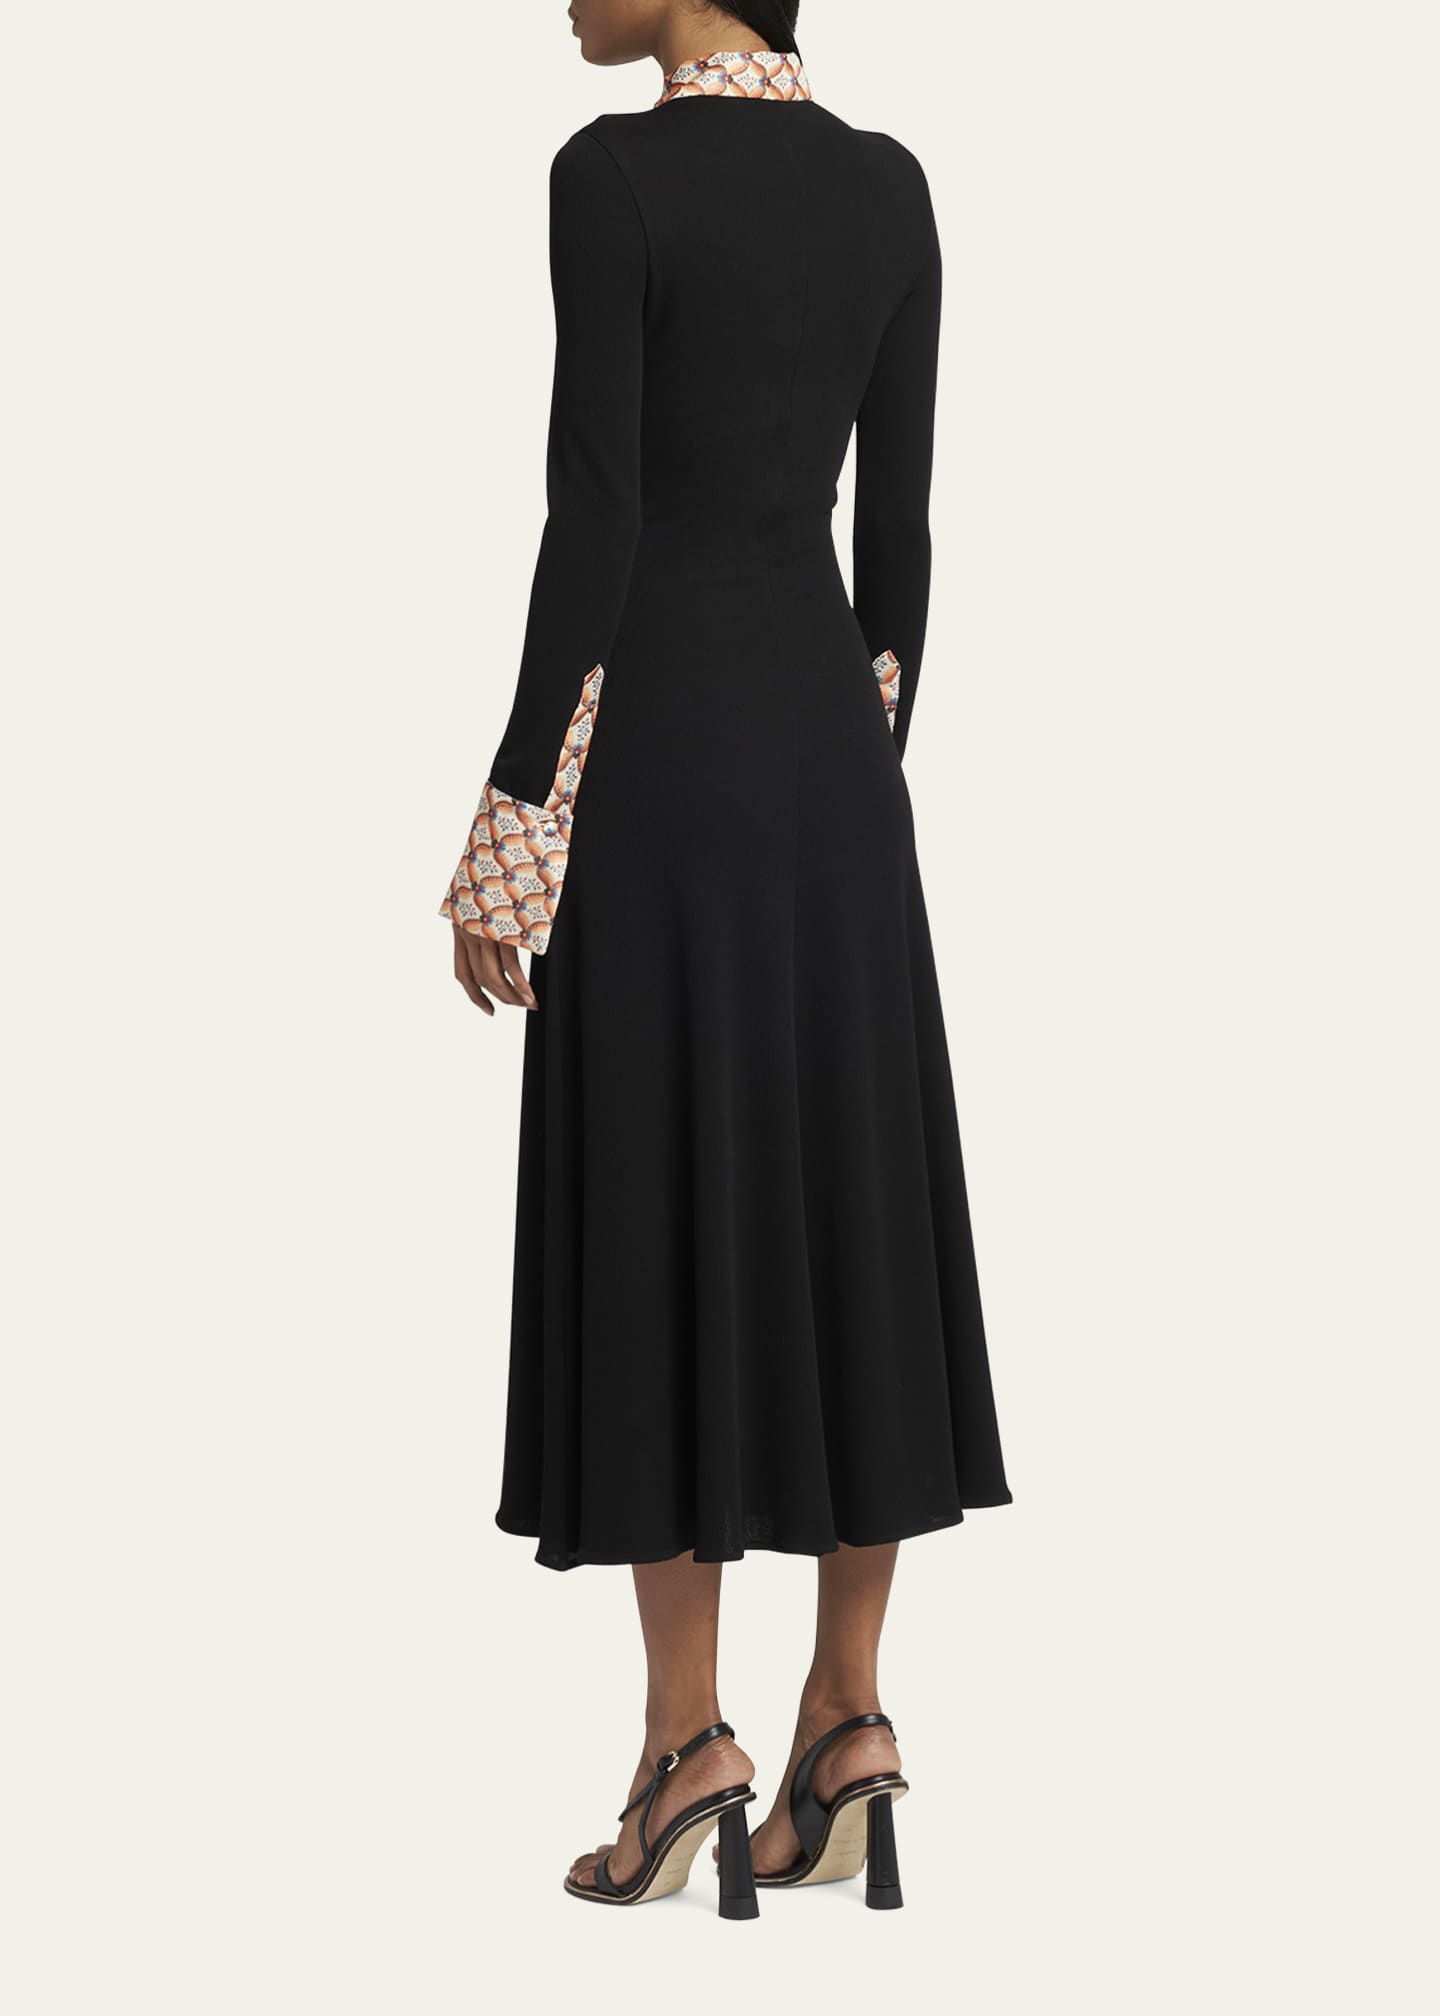 Etro Long-Sleeve Dress with Printed Cuffs - Bergdorf Goodman